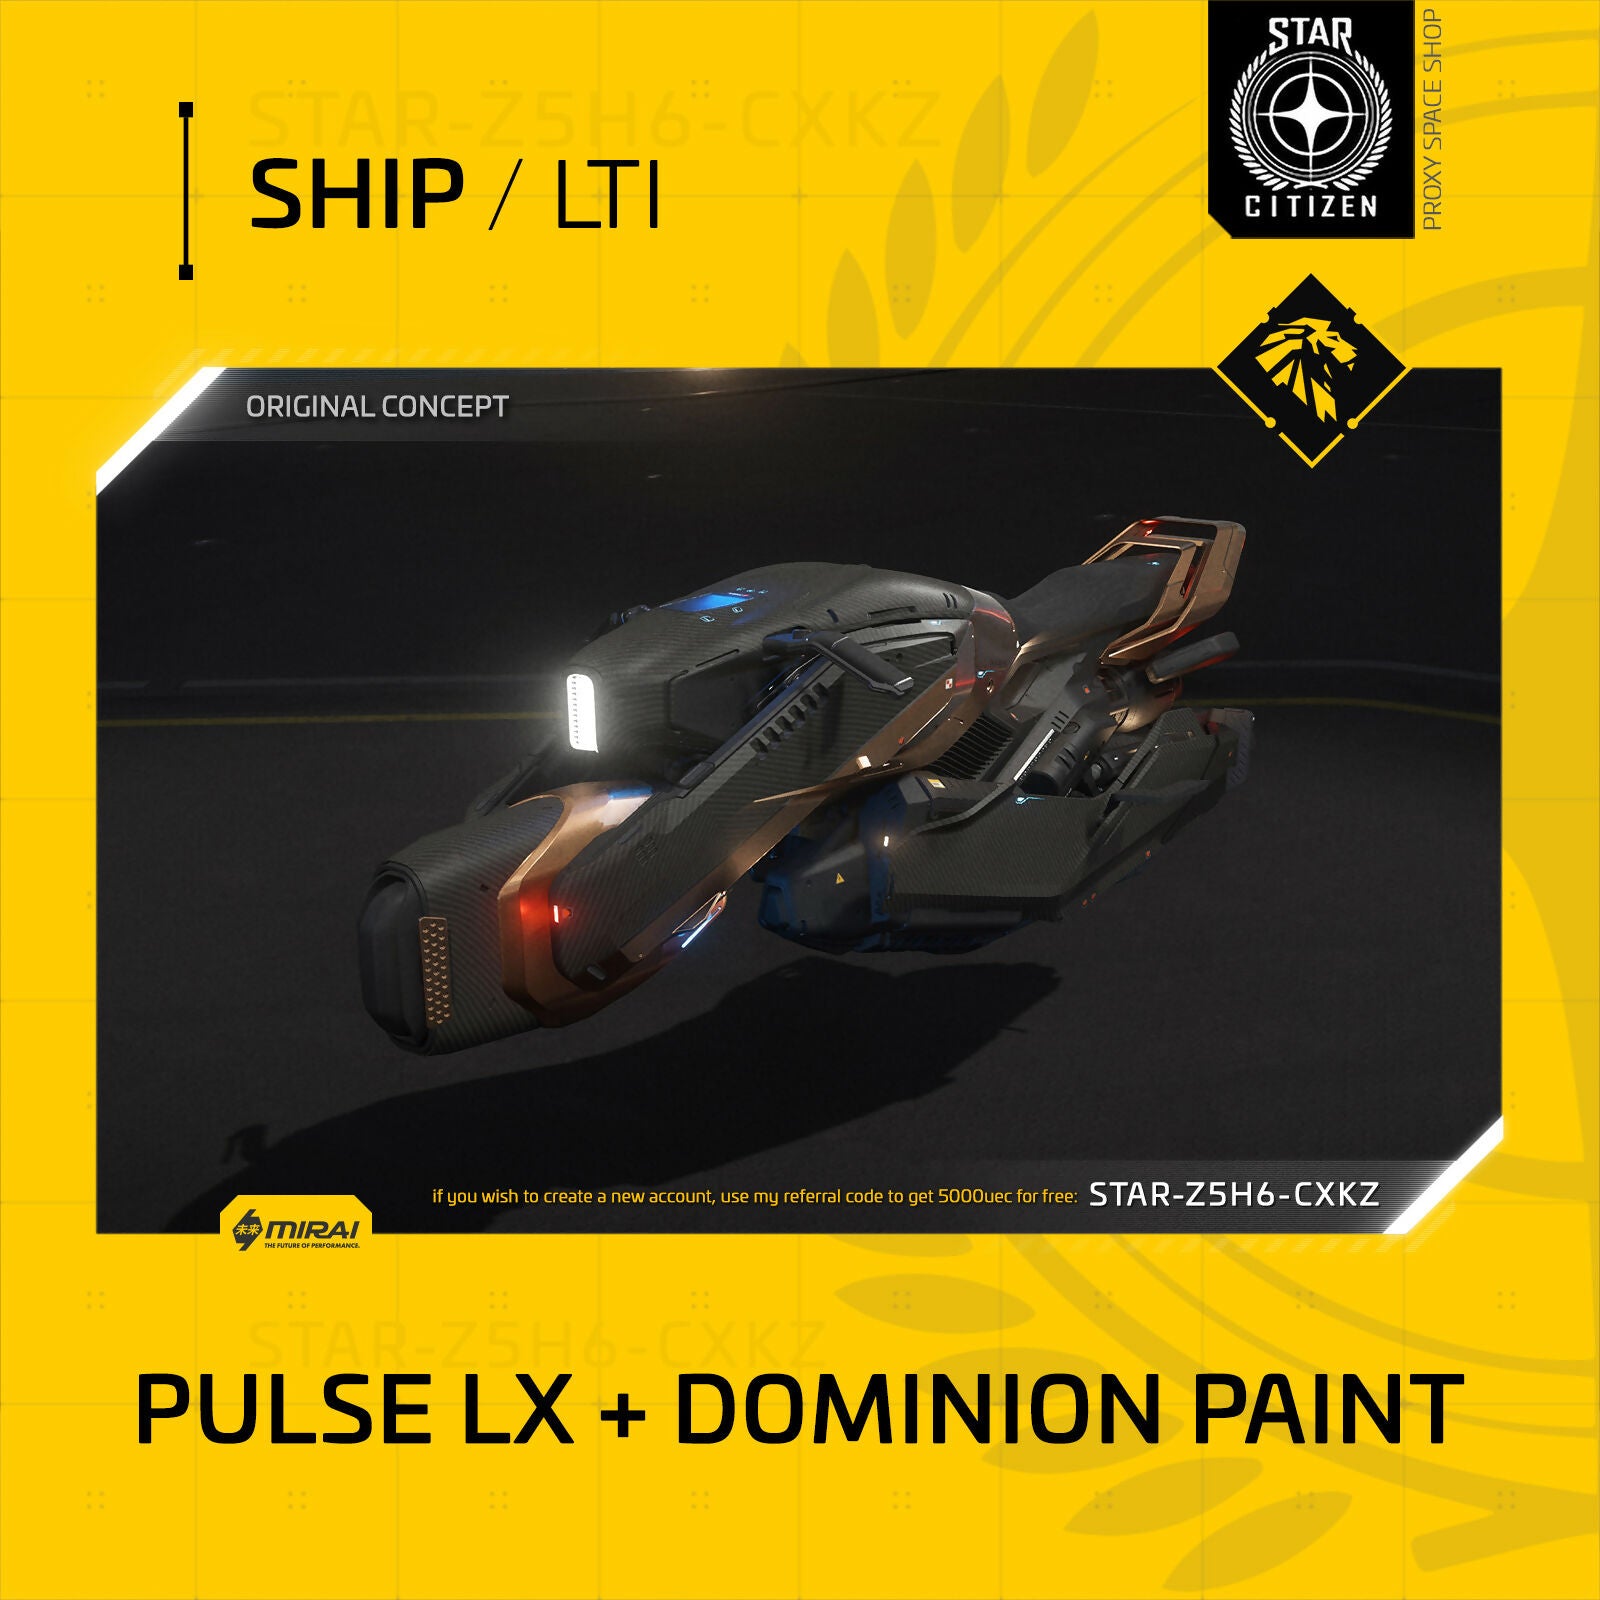 Mirai Pulse Lx Plus Dominion Paint - Lti - Original Concept OC